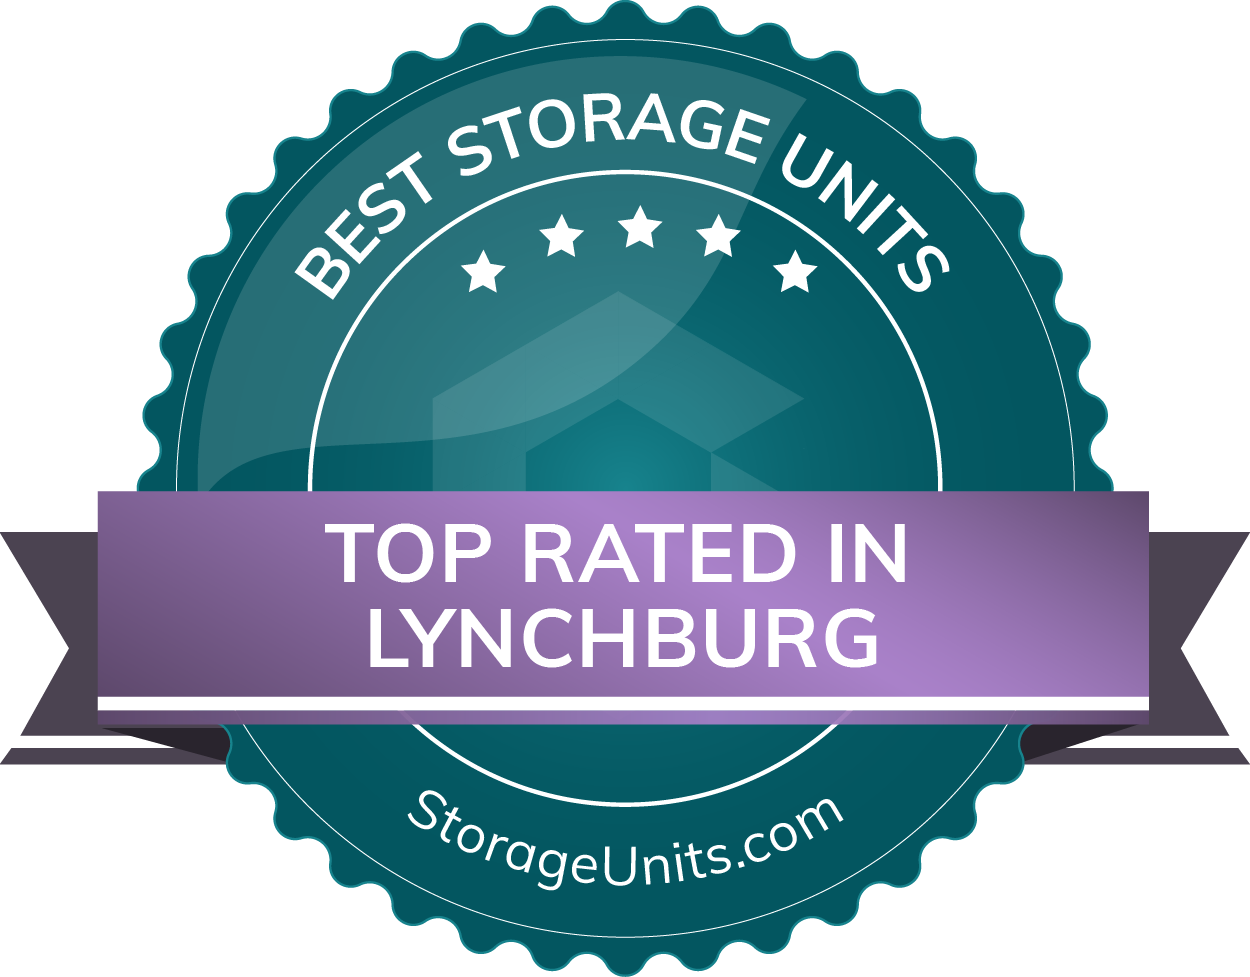 Best Self Storage Units in Lynchburg, Virginia of 2022